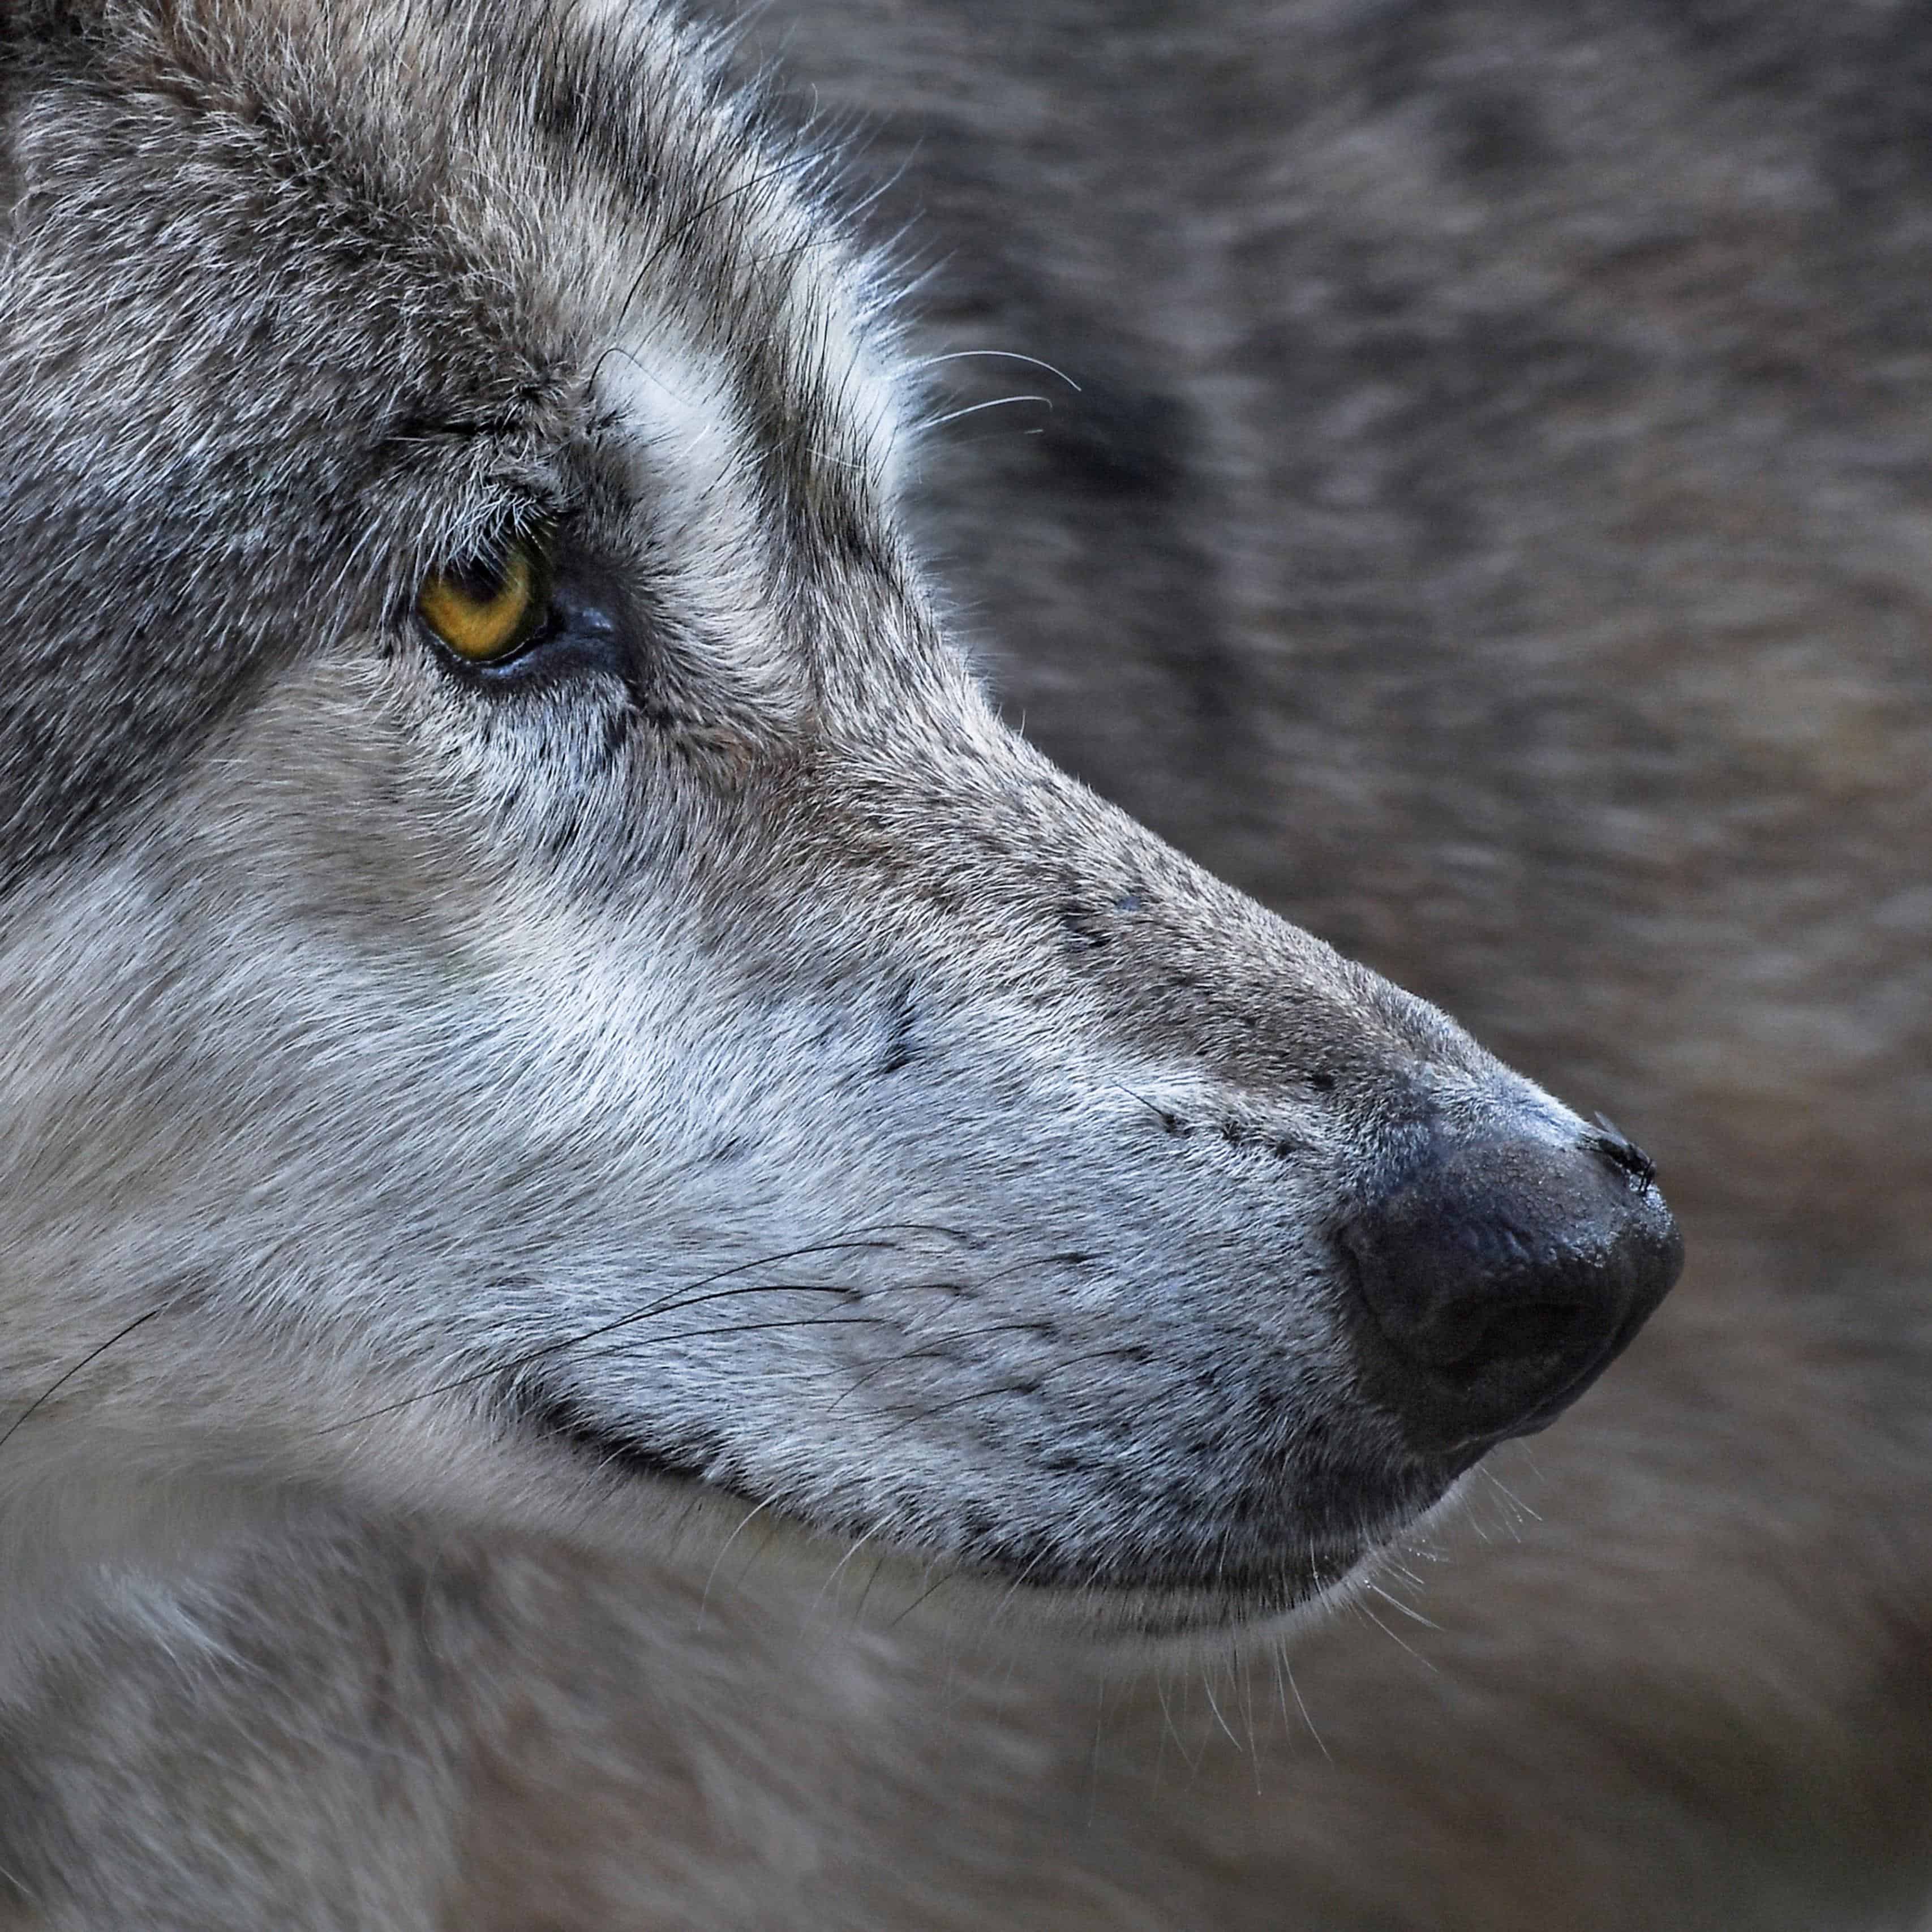 Free picture: animal, fur, wildlife, eye, wild wolf, canine, portrait, nose